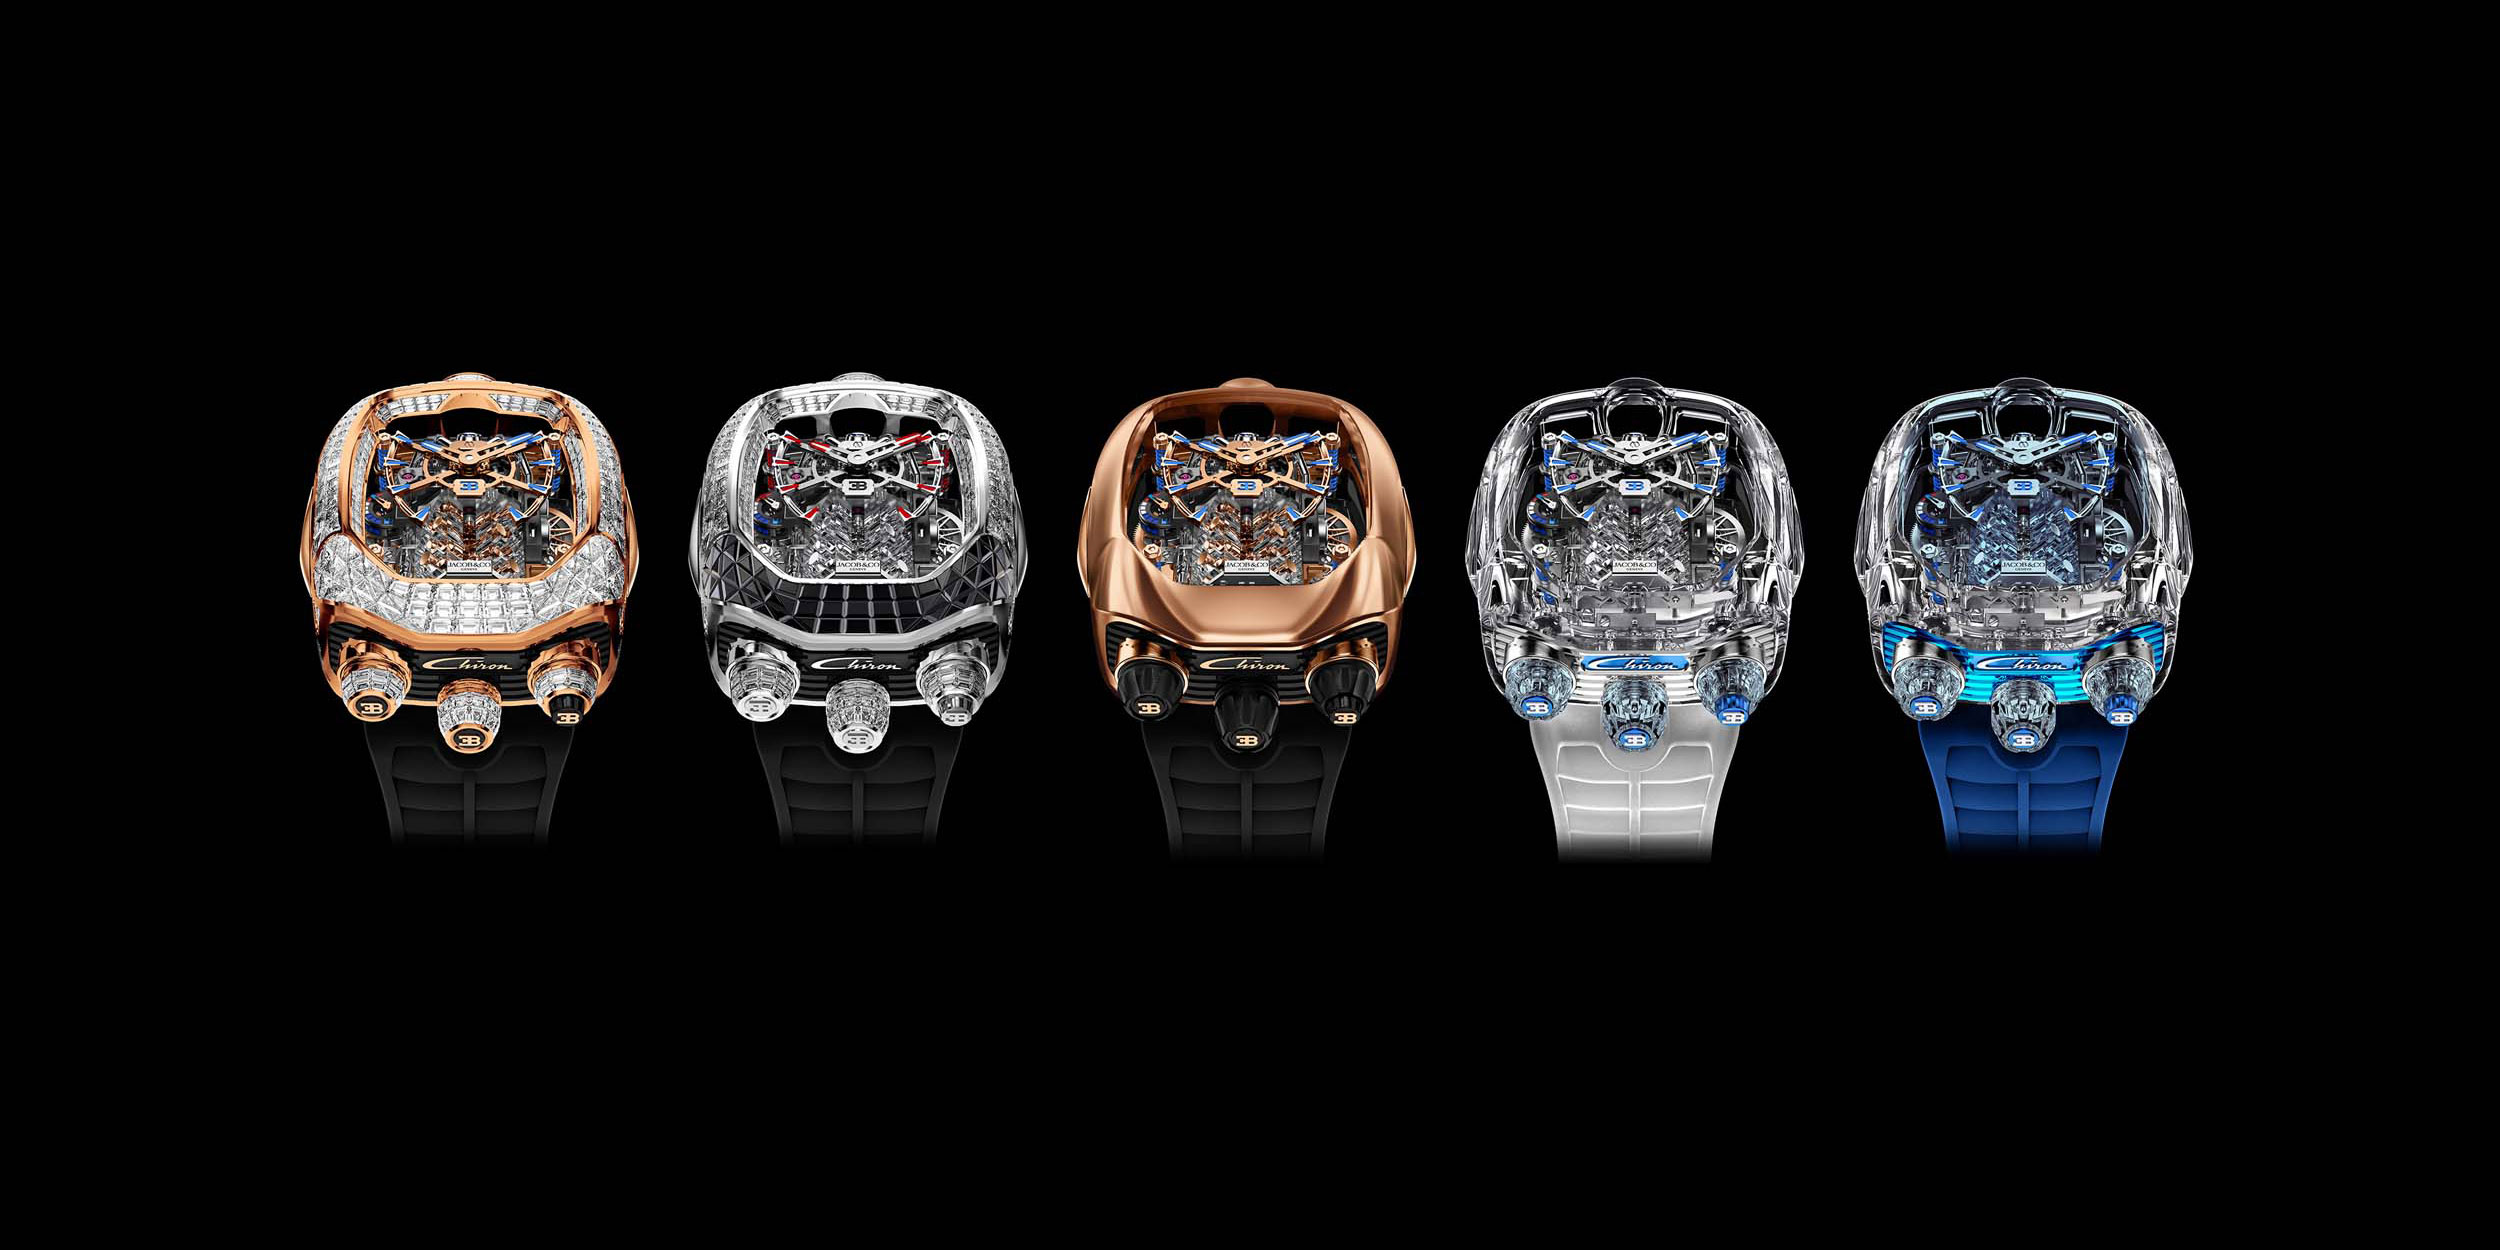 Luxury like no other: New Bugatti Chiron Tourbillon Timepiece Limited Editions